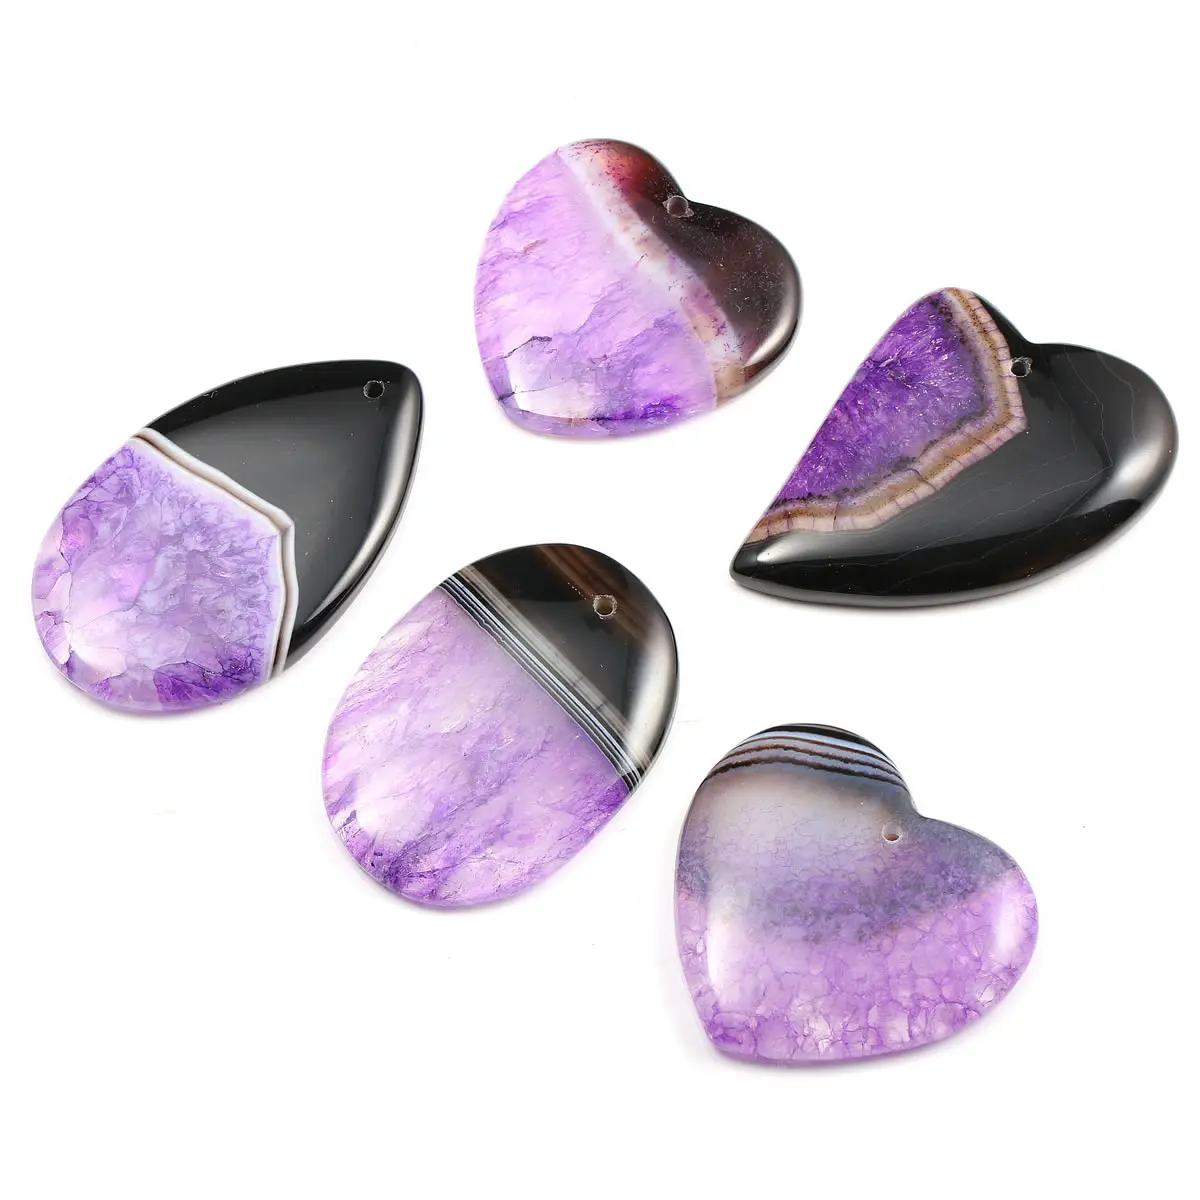 

5pcs/lot Black Purple Striped Agates Pendant Reiki Healing Natural Stone Meditation Amulet DIY Jewelry Natural Stone Charms